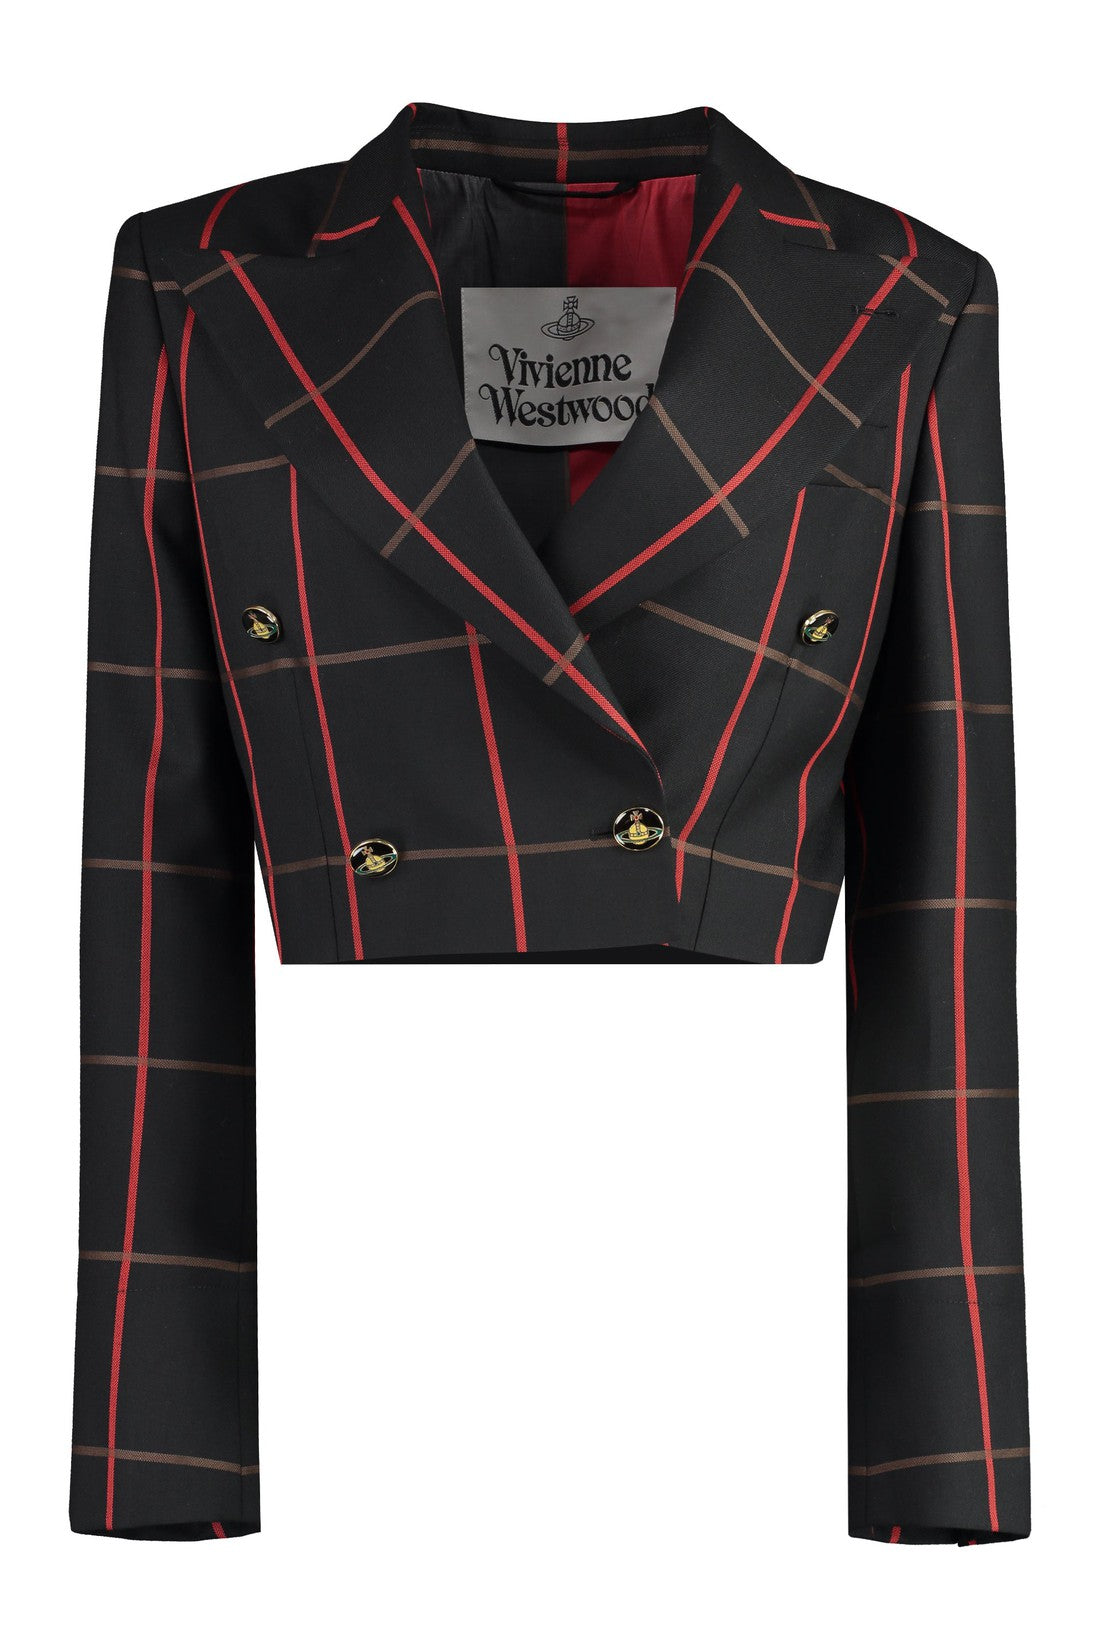 Vivienne Westwood-OUTLET-SALE-Checked wood Jacket-ARCHIVIST